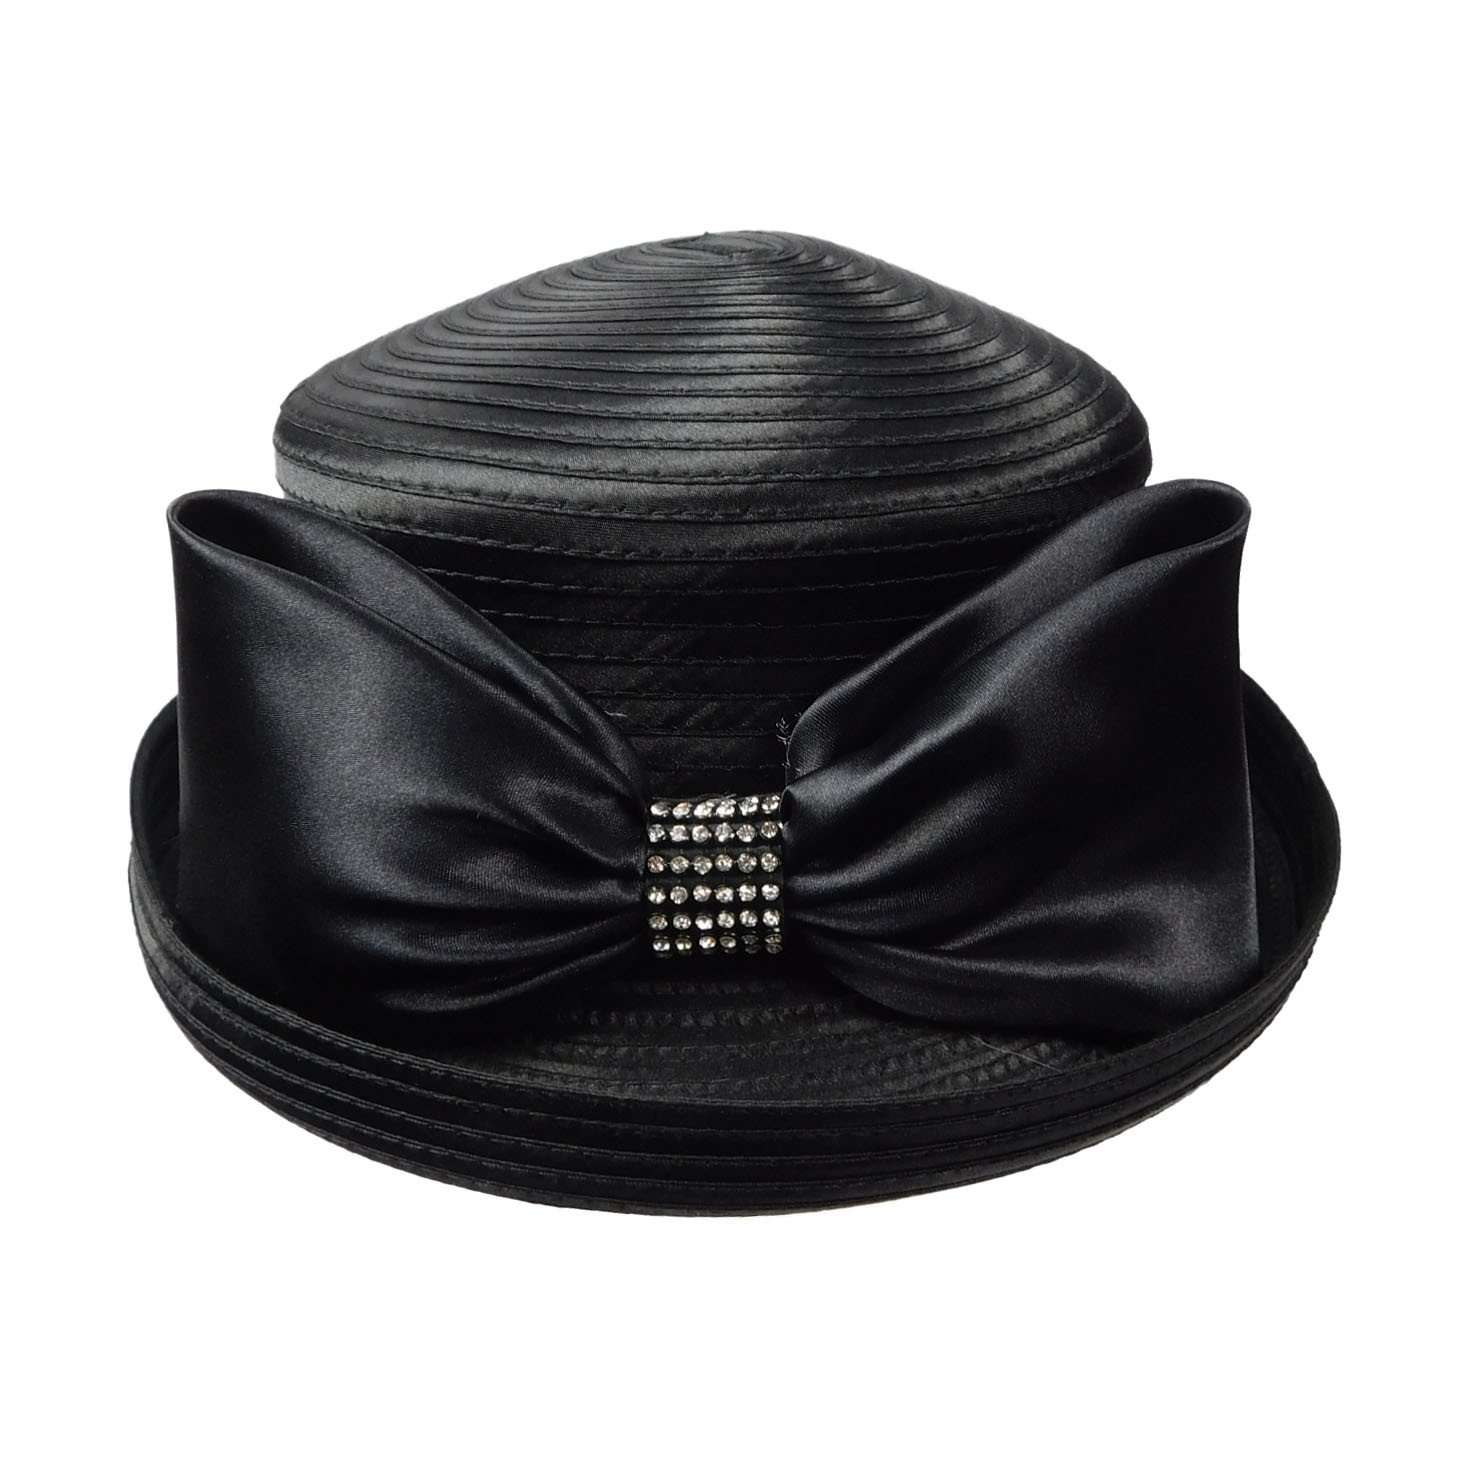 Satin Braid Bowler Style Church Hat with Bow and Rhinestone Loop Dress Hat Something Special LA WWSR802BK Black  